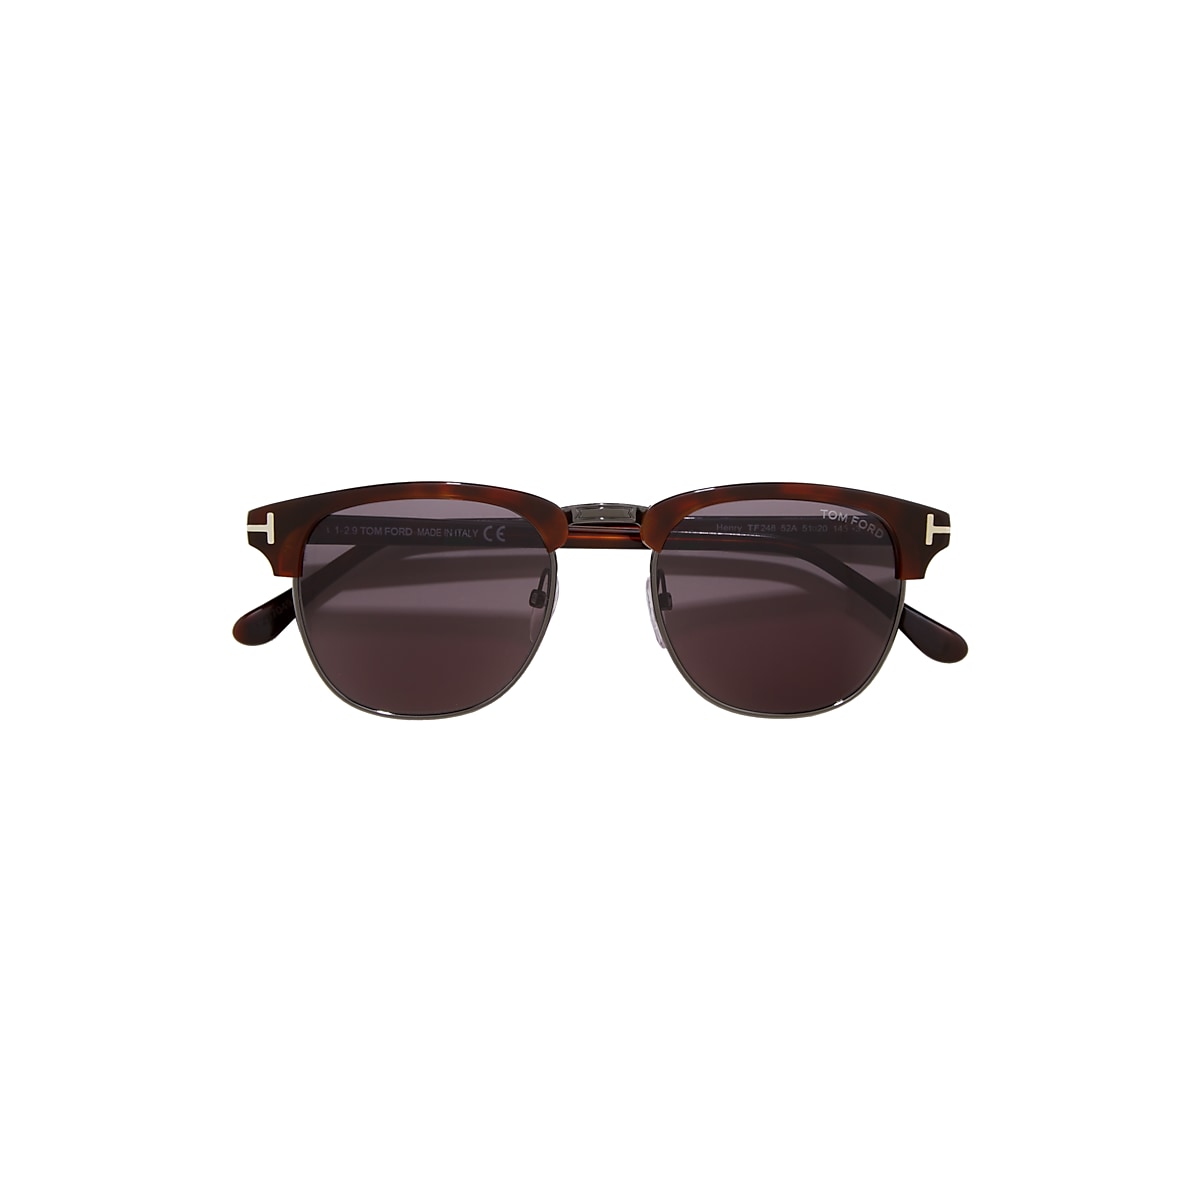 Tom Ford FT0248 HENRY 51 Brown & Tortoise Light Sunglasses | Sunglass Hut USA